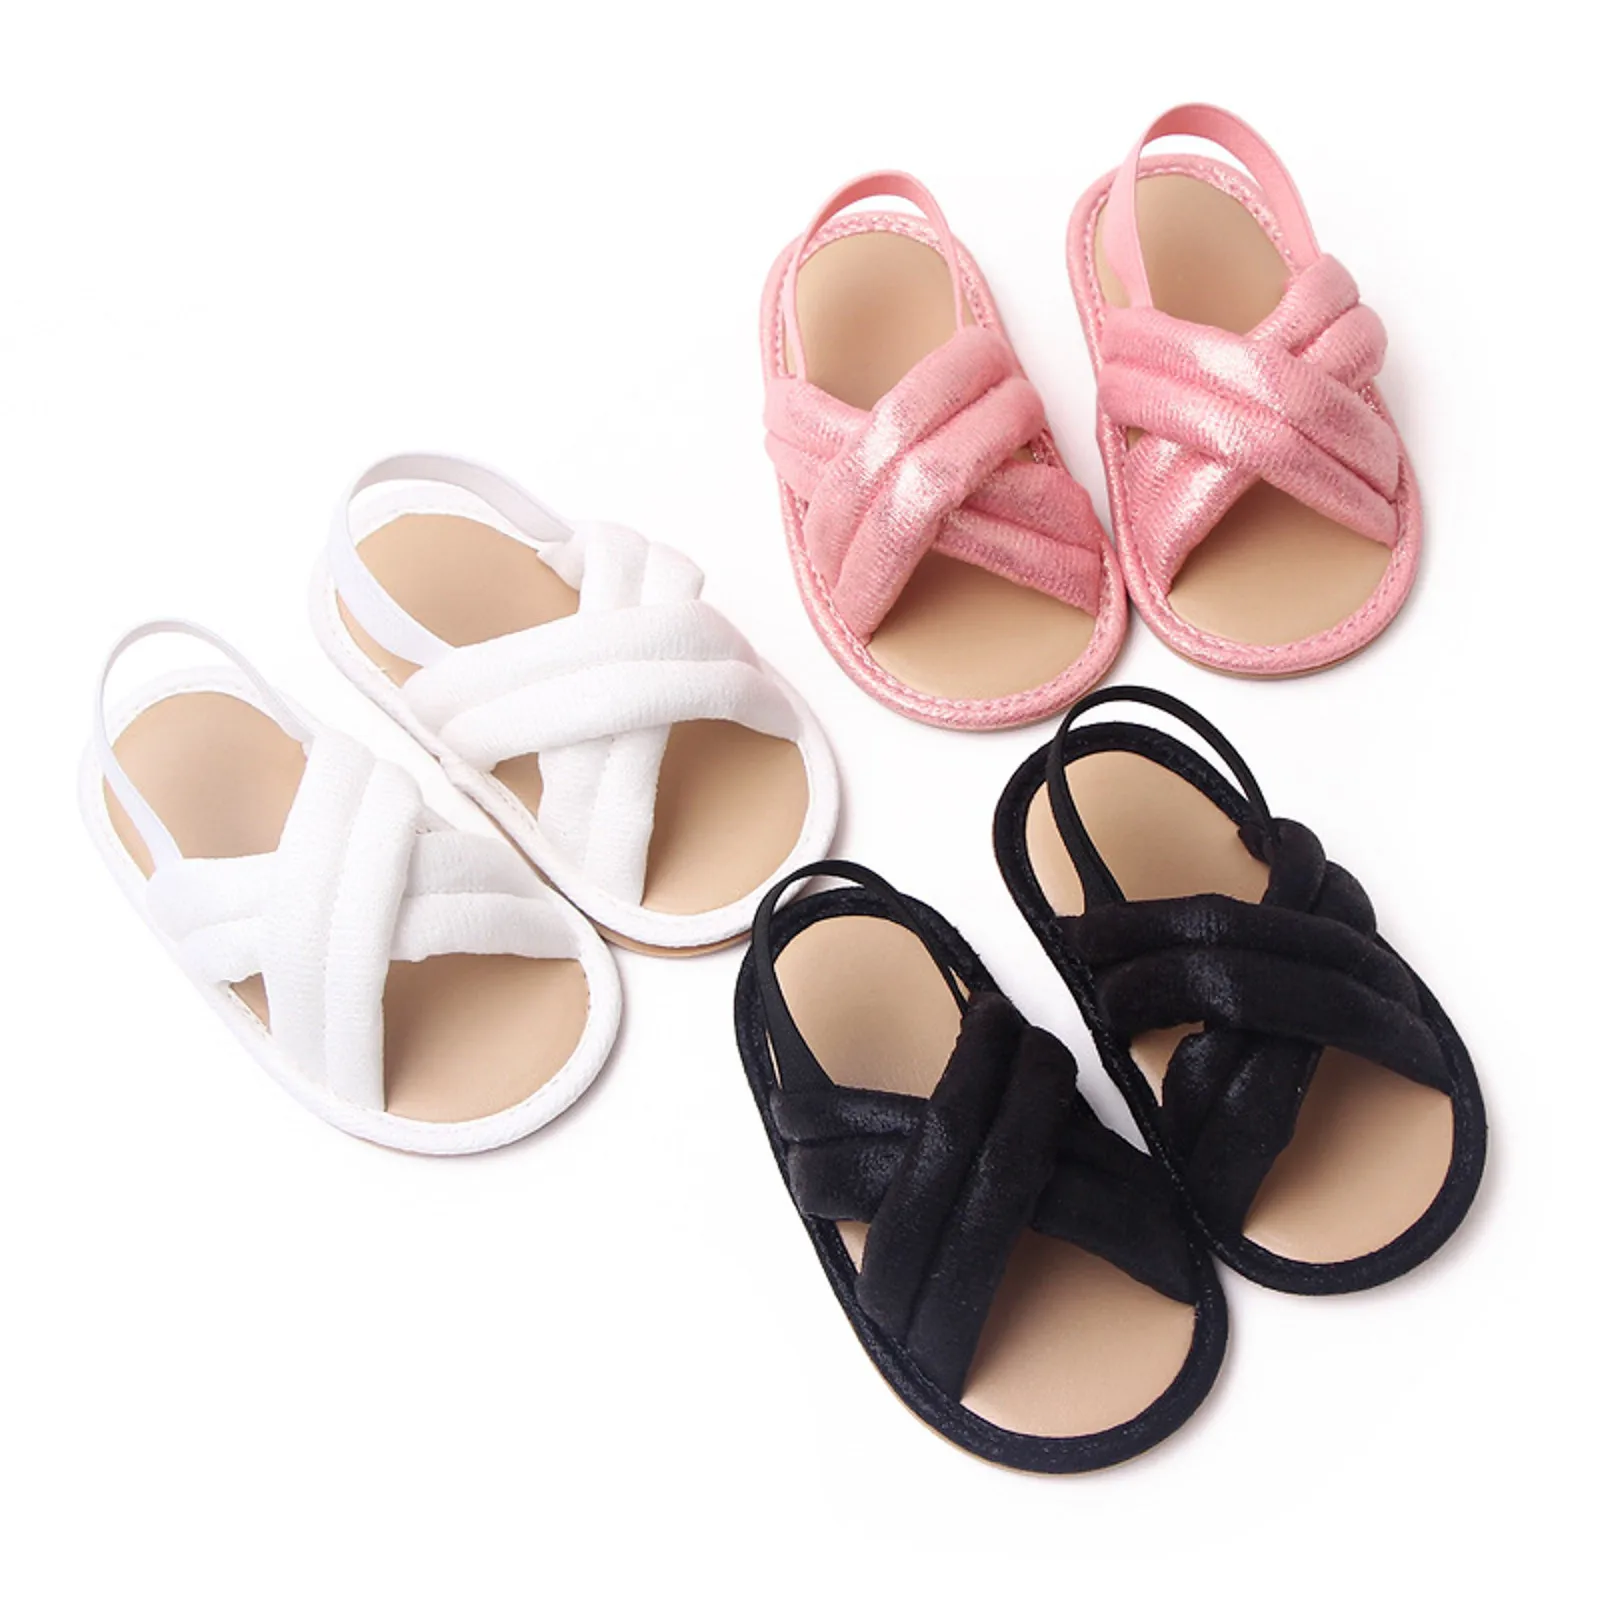 

Infant Baby Boys Girls Sandals Summer Cross Anti-slip Soft Sole Crib Prewalker Newborn Shoes Toddler First Walkers zapatos mujer